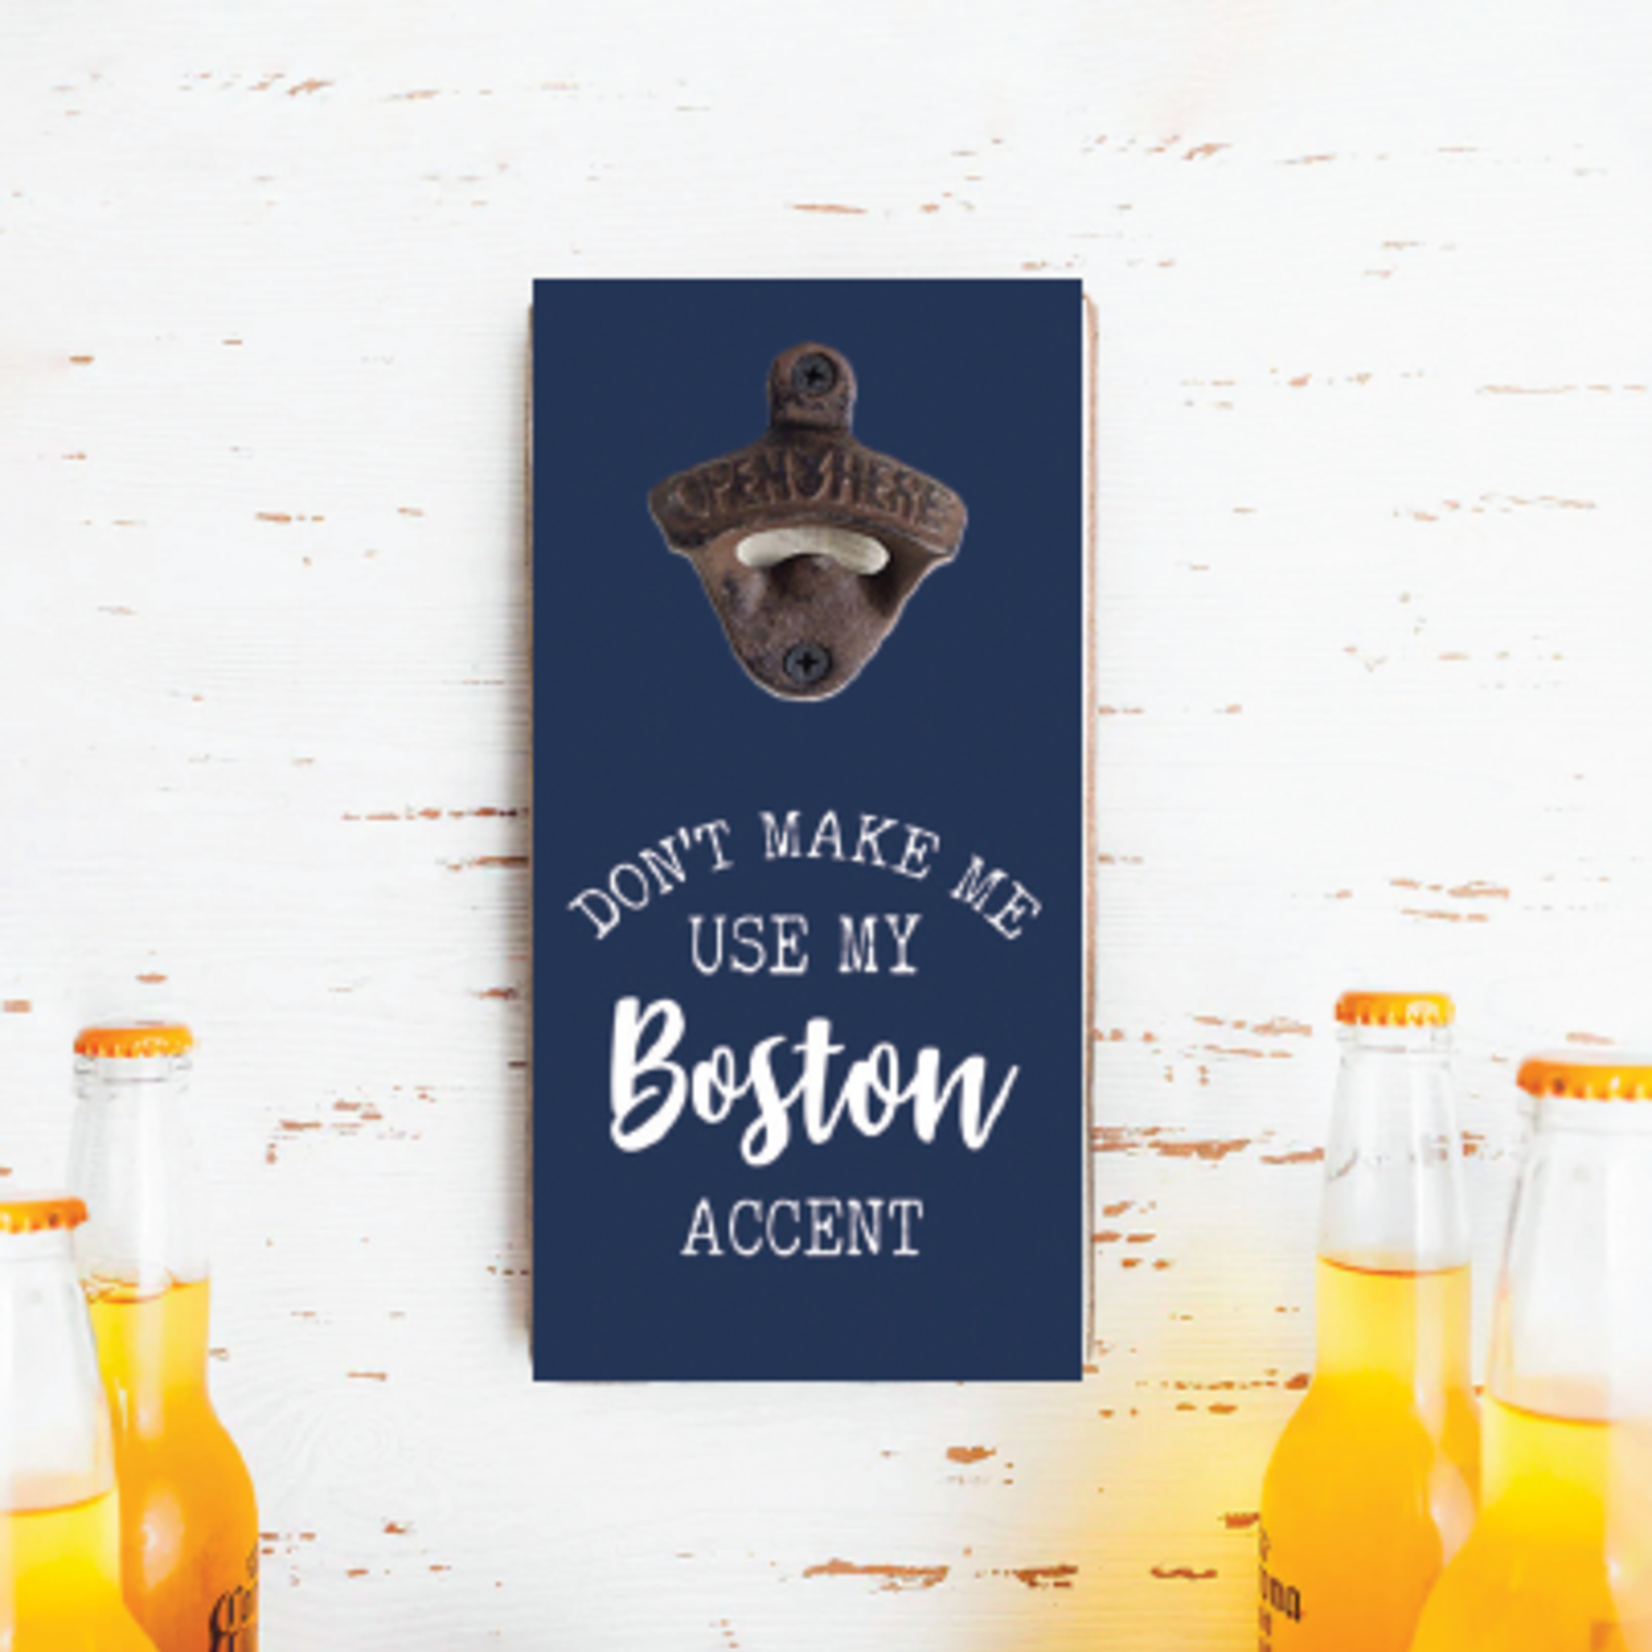 Rustic Marlin Rustic Marlin - Bottle Opener - Use my Accent - Boston